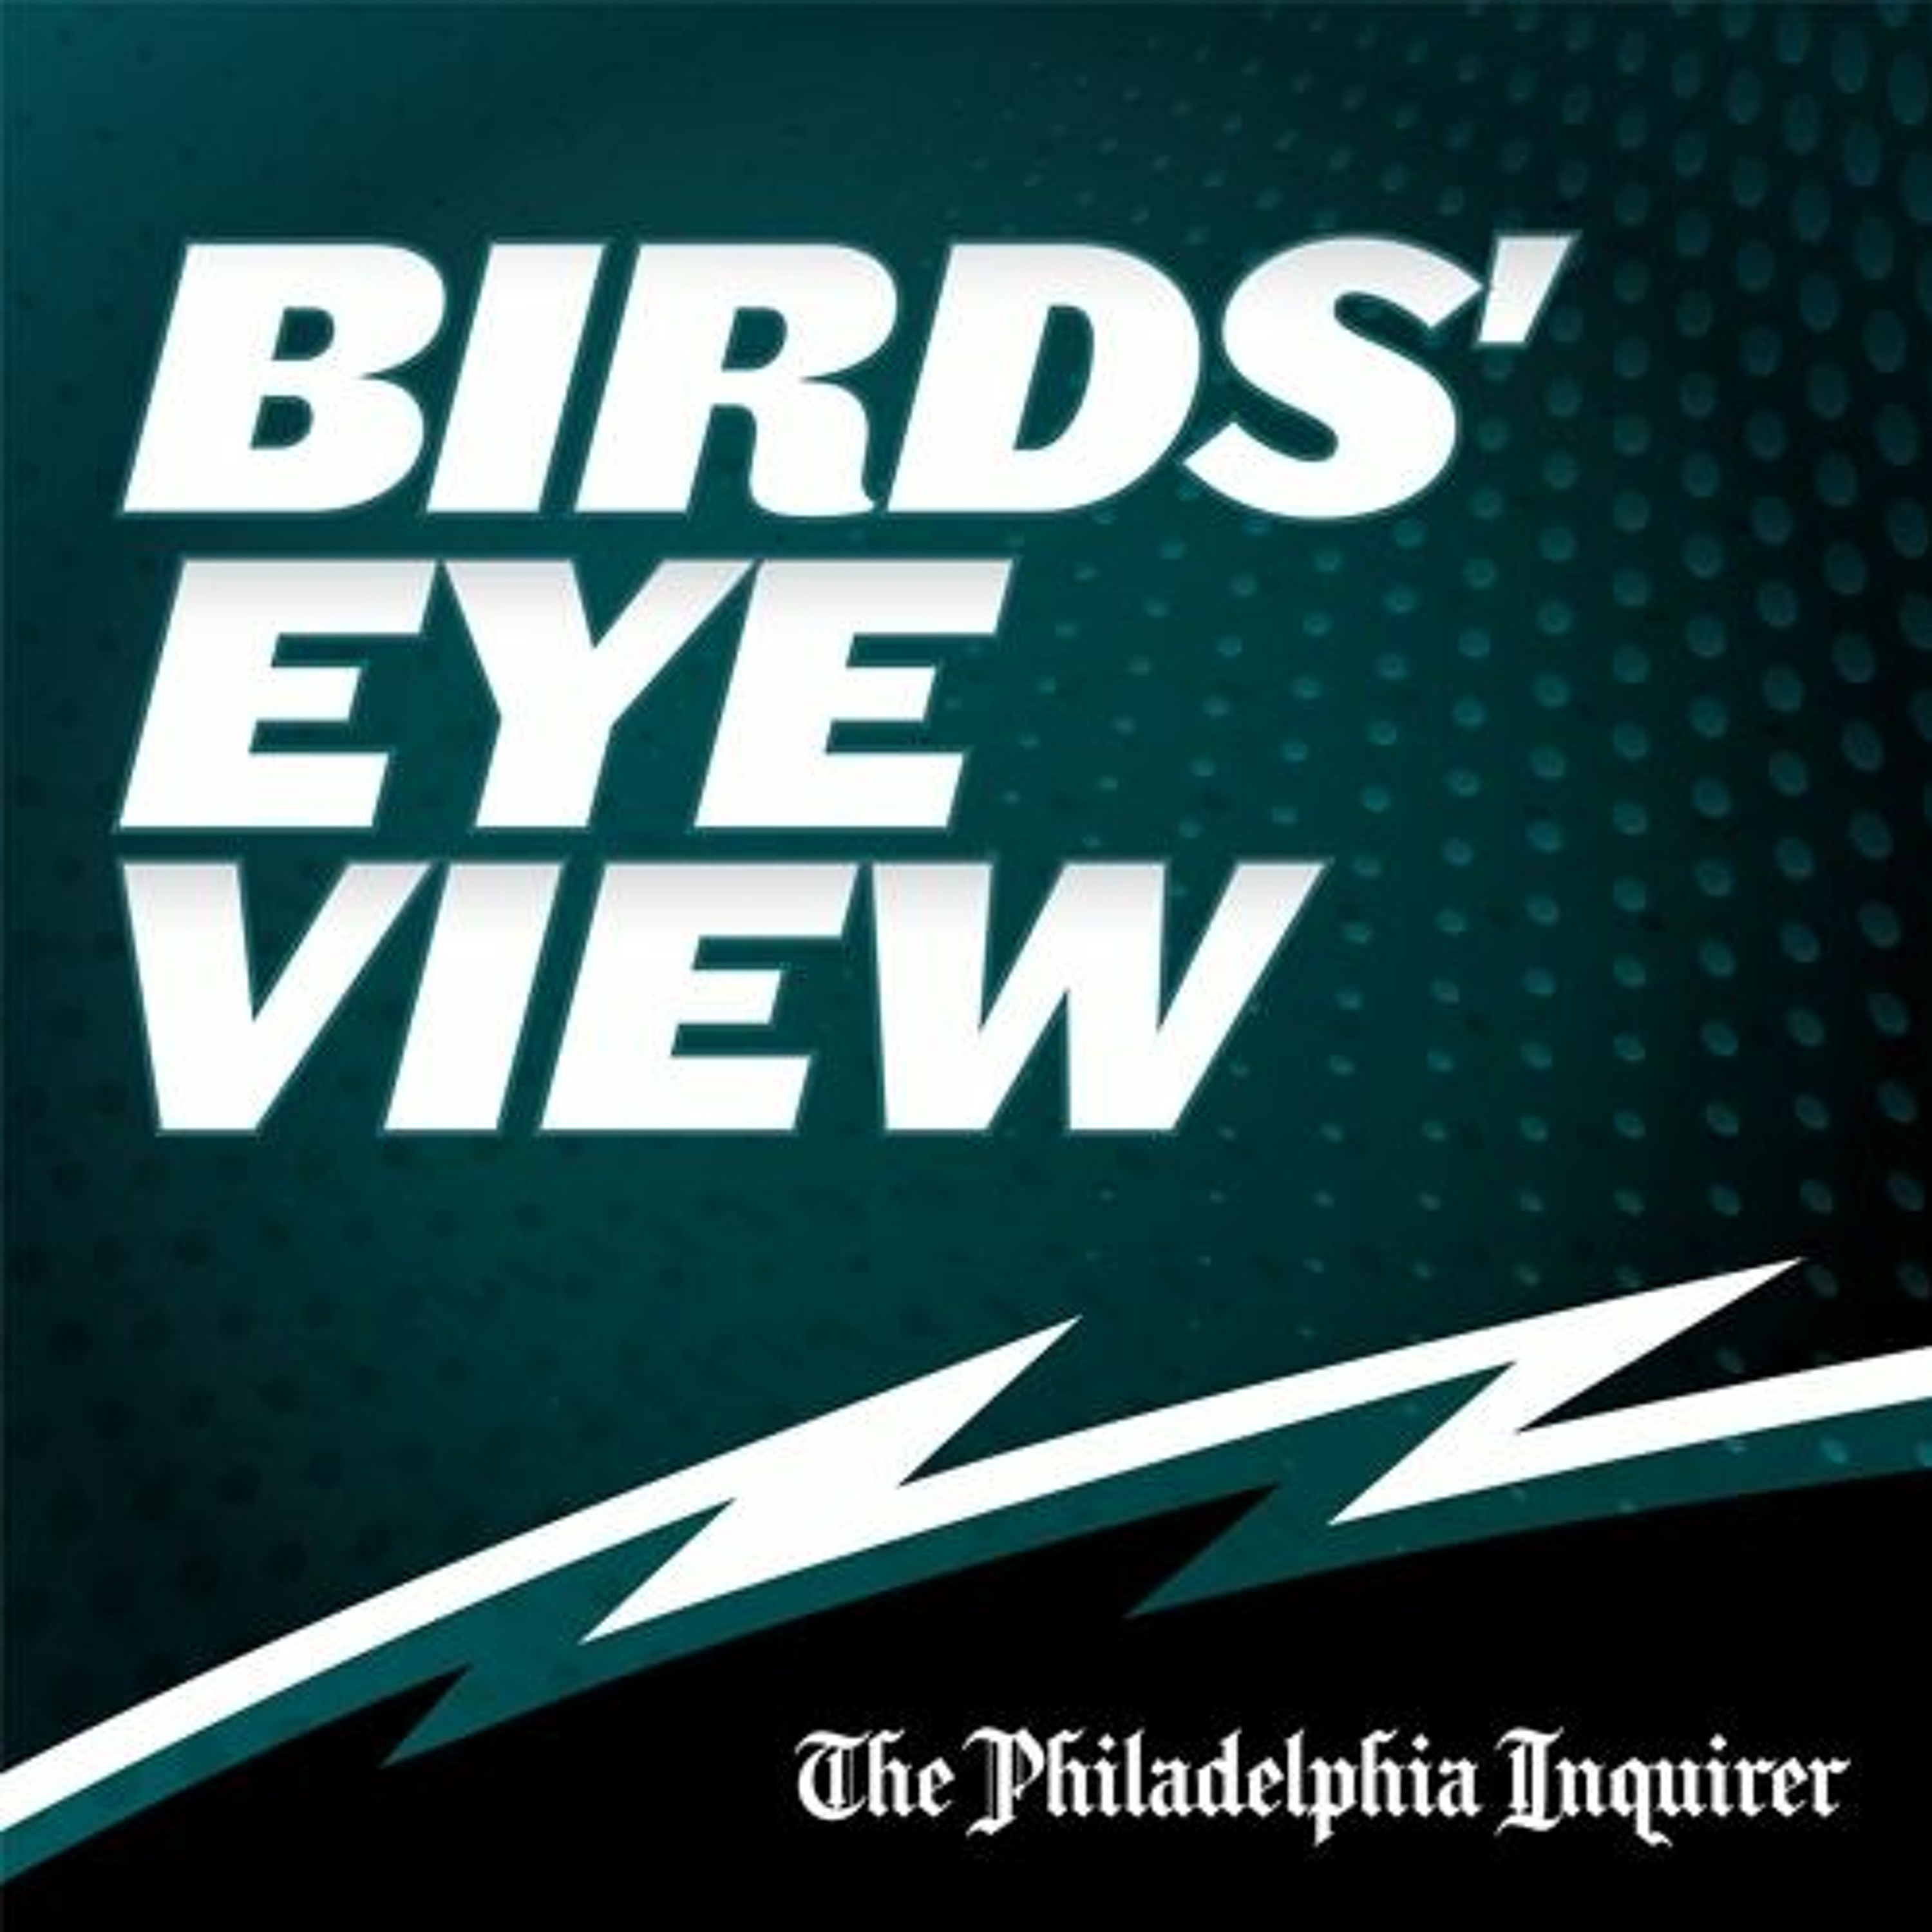 A deep dive into the Eagles' offense